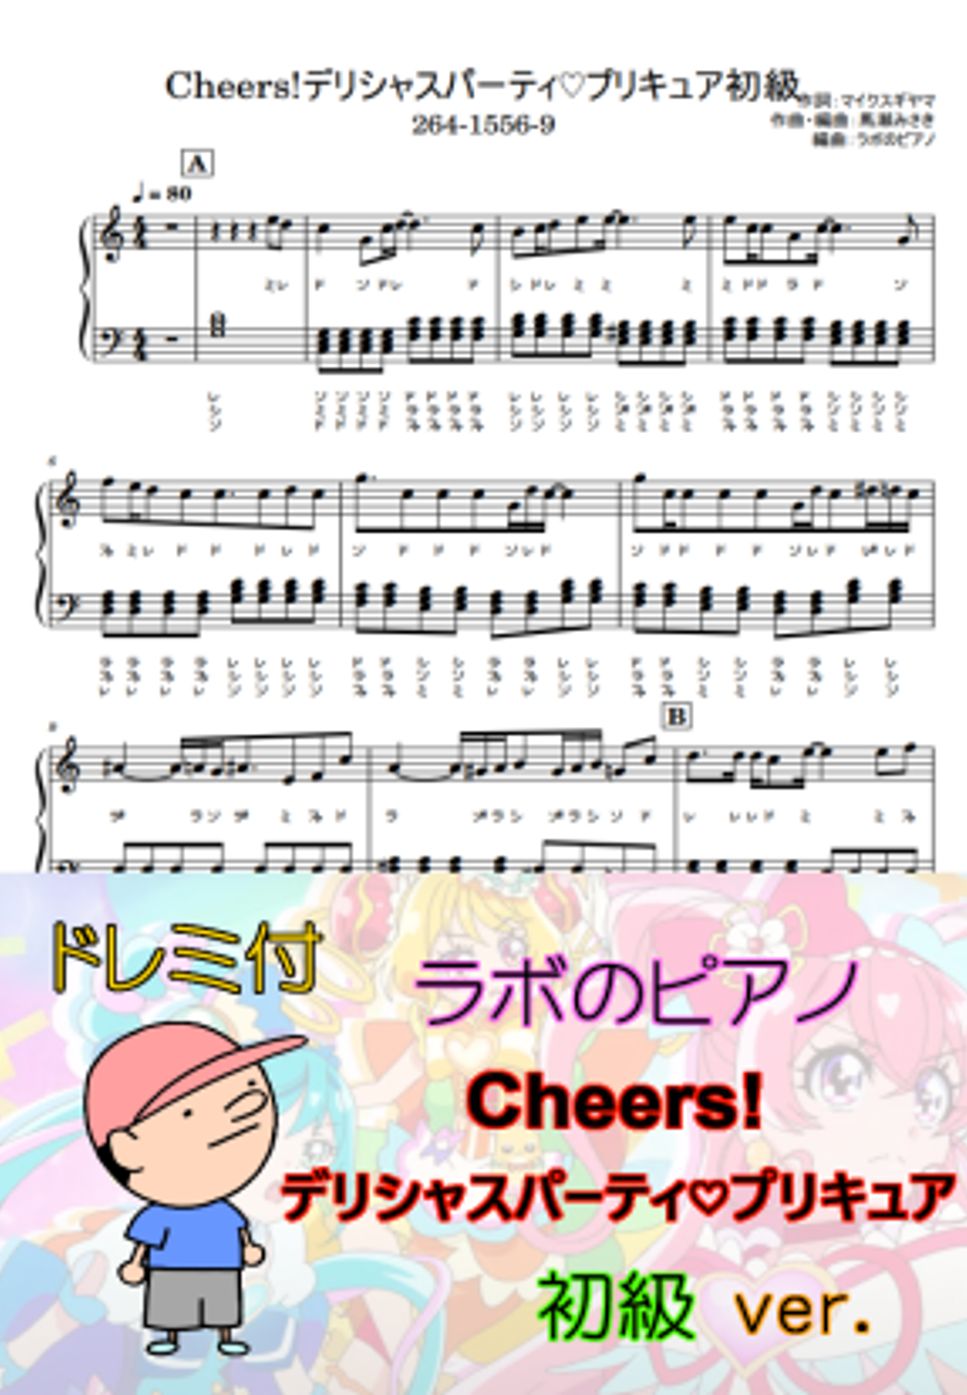 Machico - Cheers! デリシャスパーティ♡プリキュアOP ドレミ付 初級ver. by ラボのピアノ